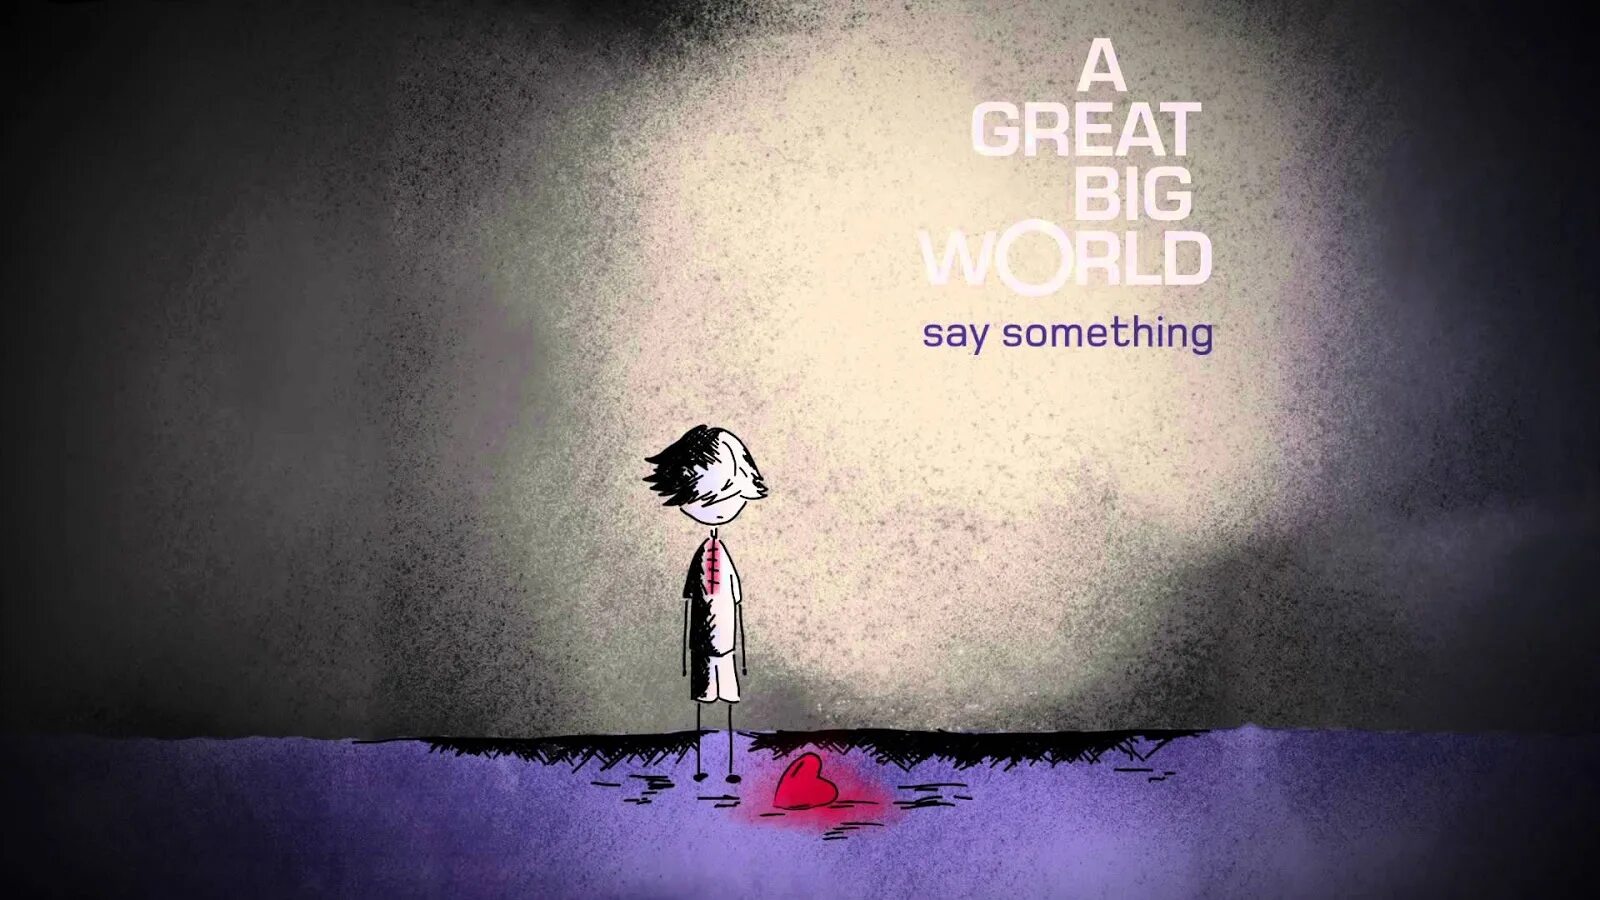 Say something!. Big World. Say something a great big World текст. A great big World. Can i say something